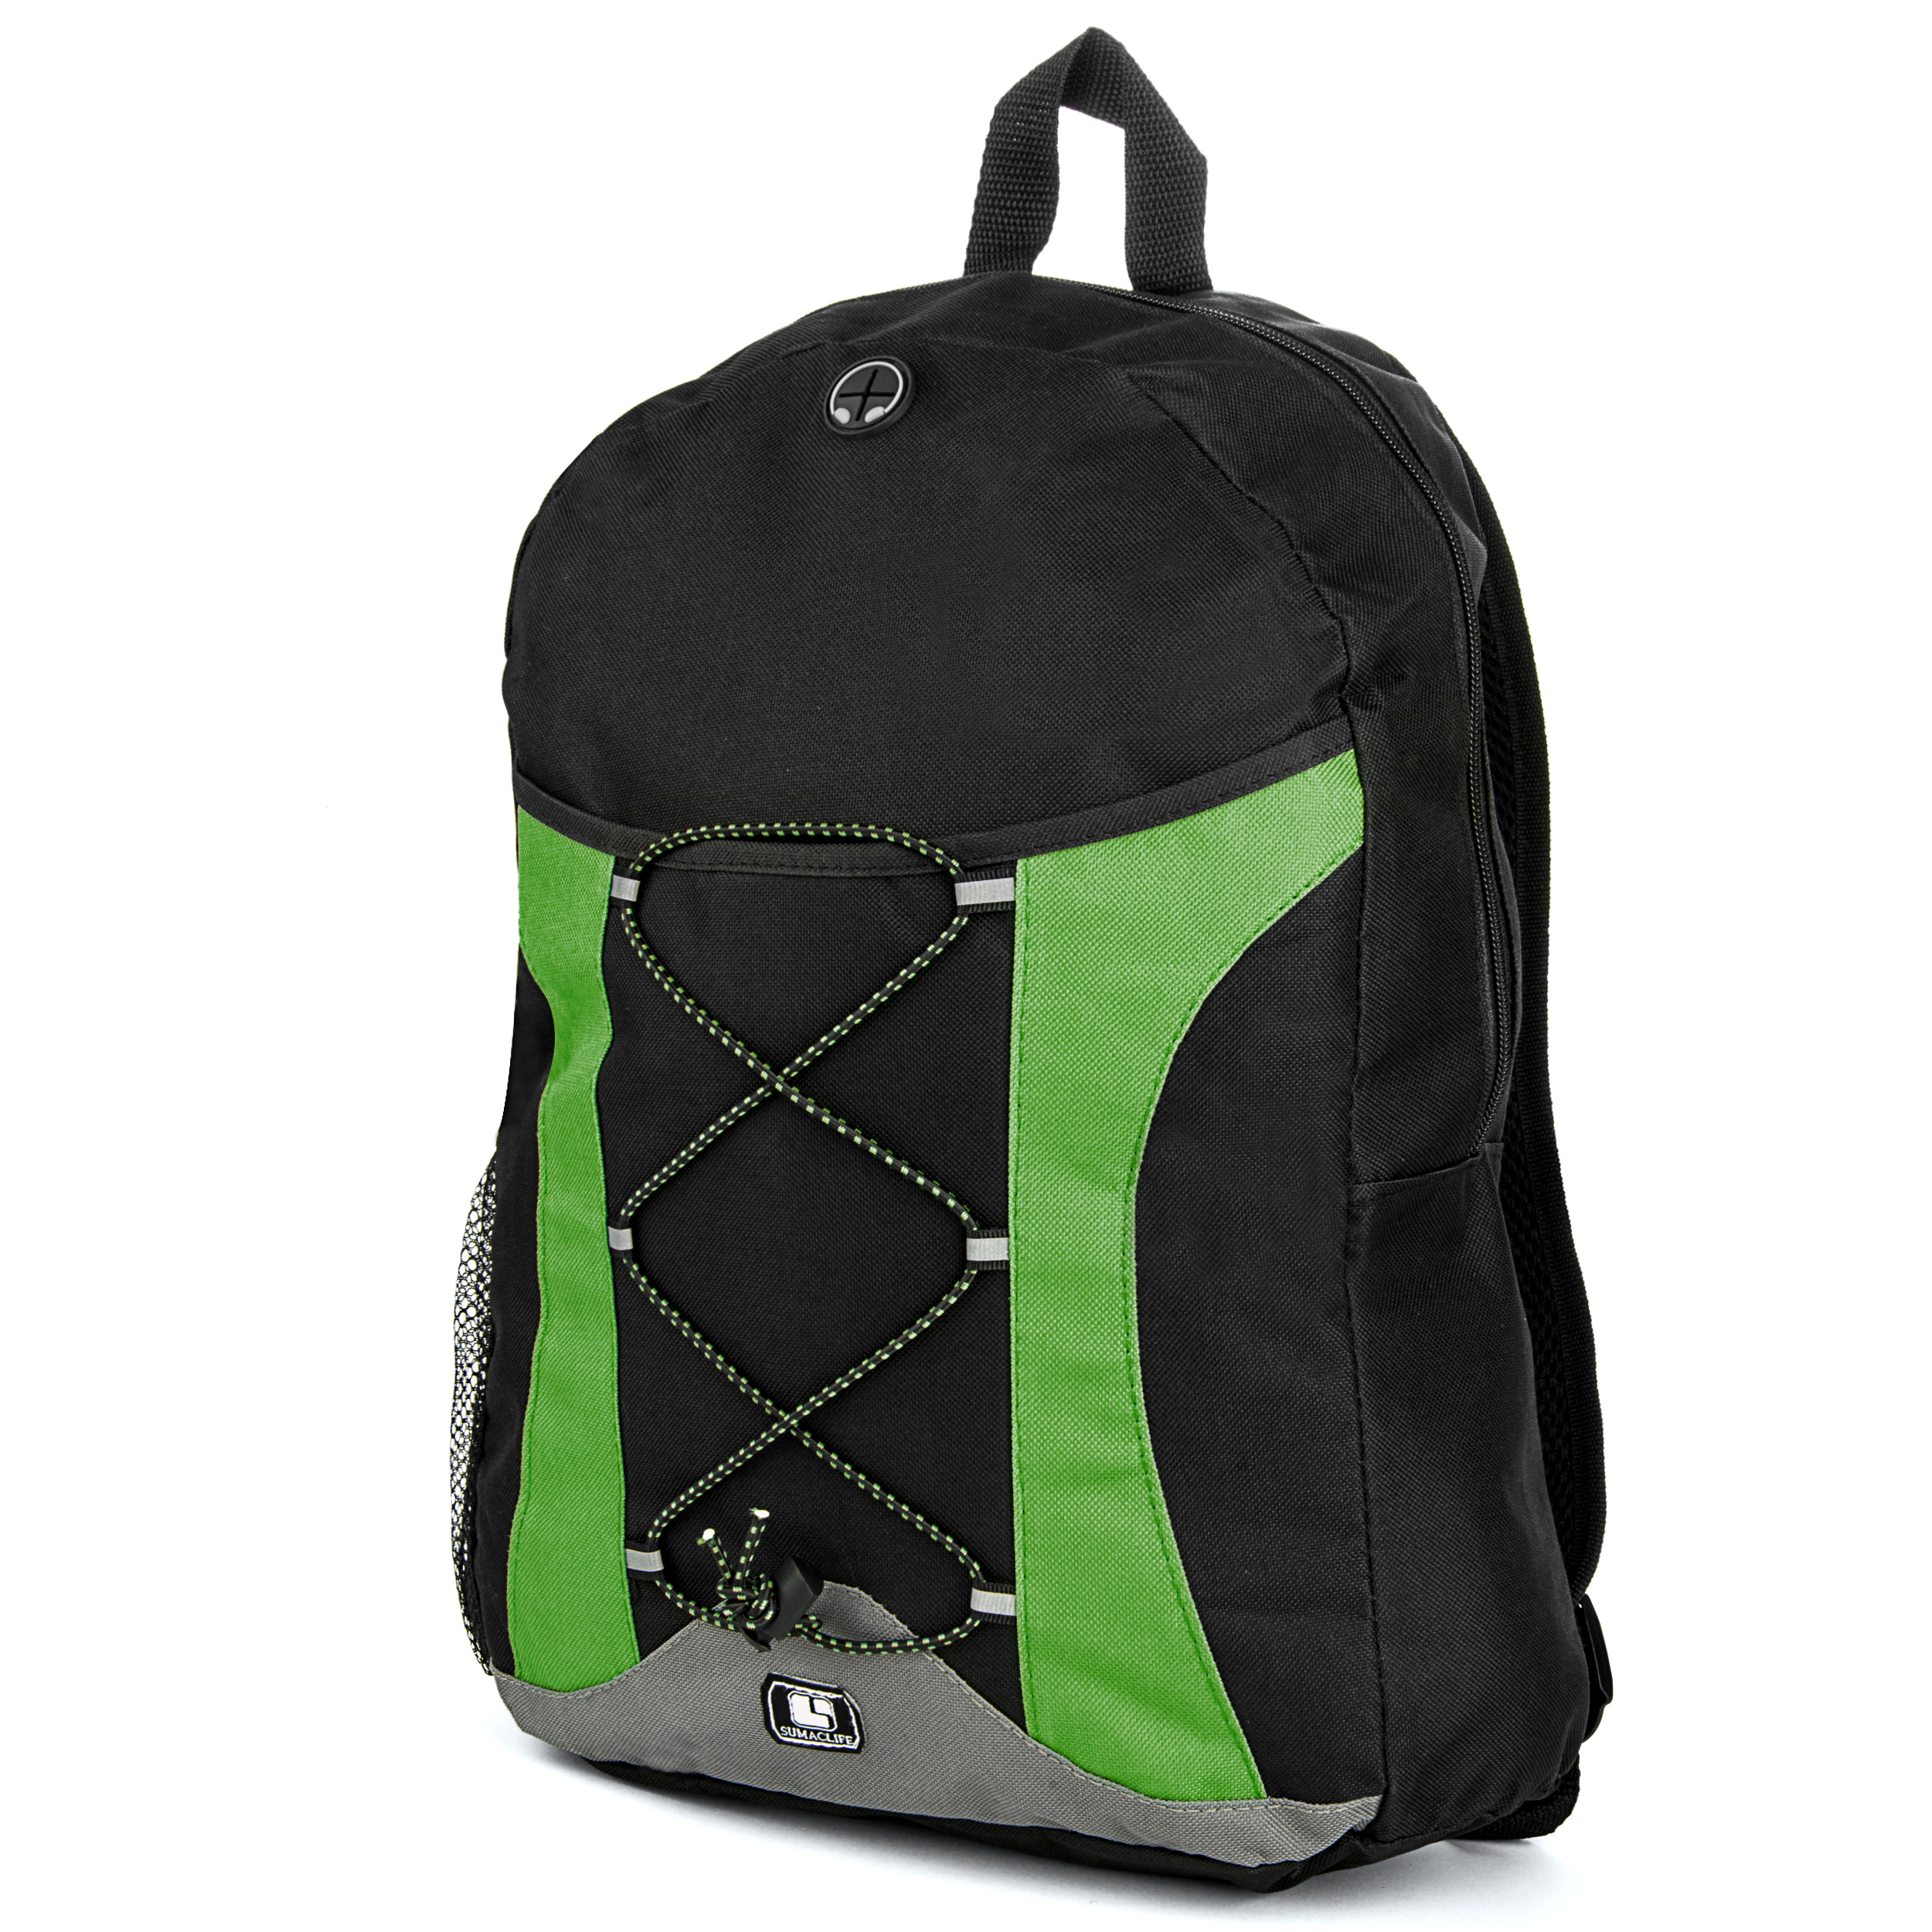 sumaclife Canvas Lightweight Multi-purpose School Backpack fits Gateway NV Series 15.6 Laptops